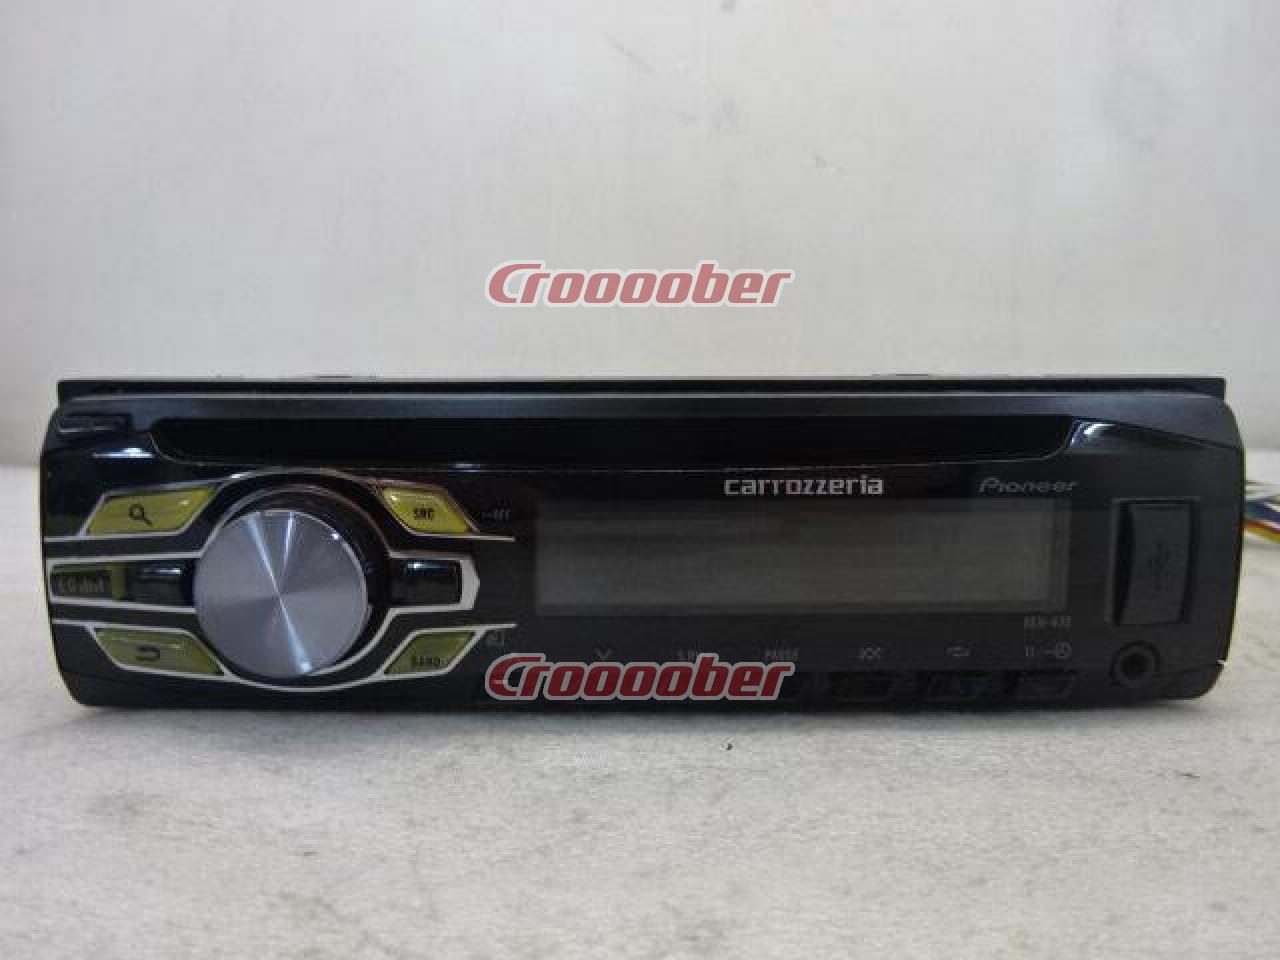 Carrozzeria DEH-470 | CD Tuners | Croooober